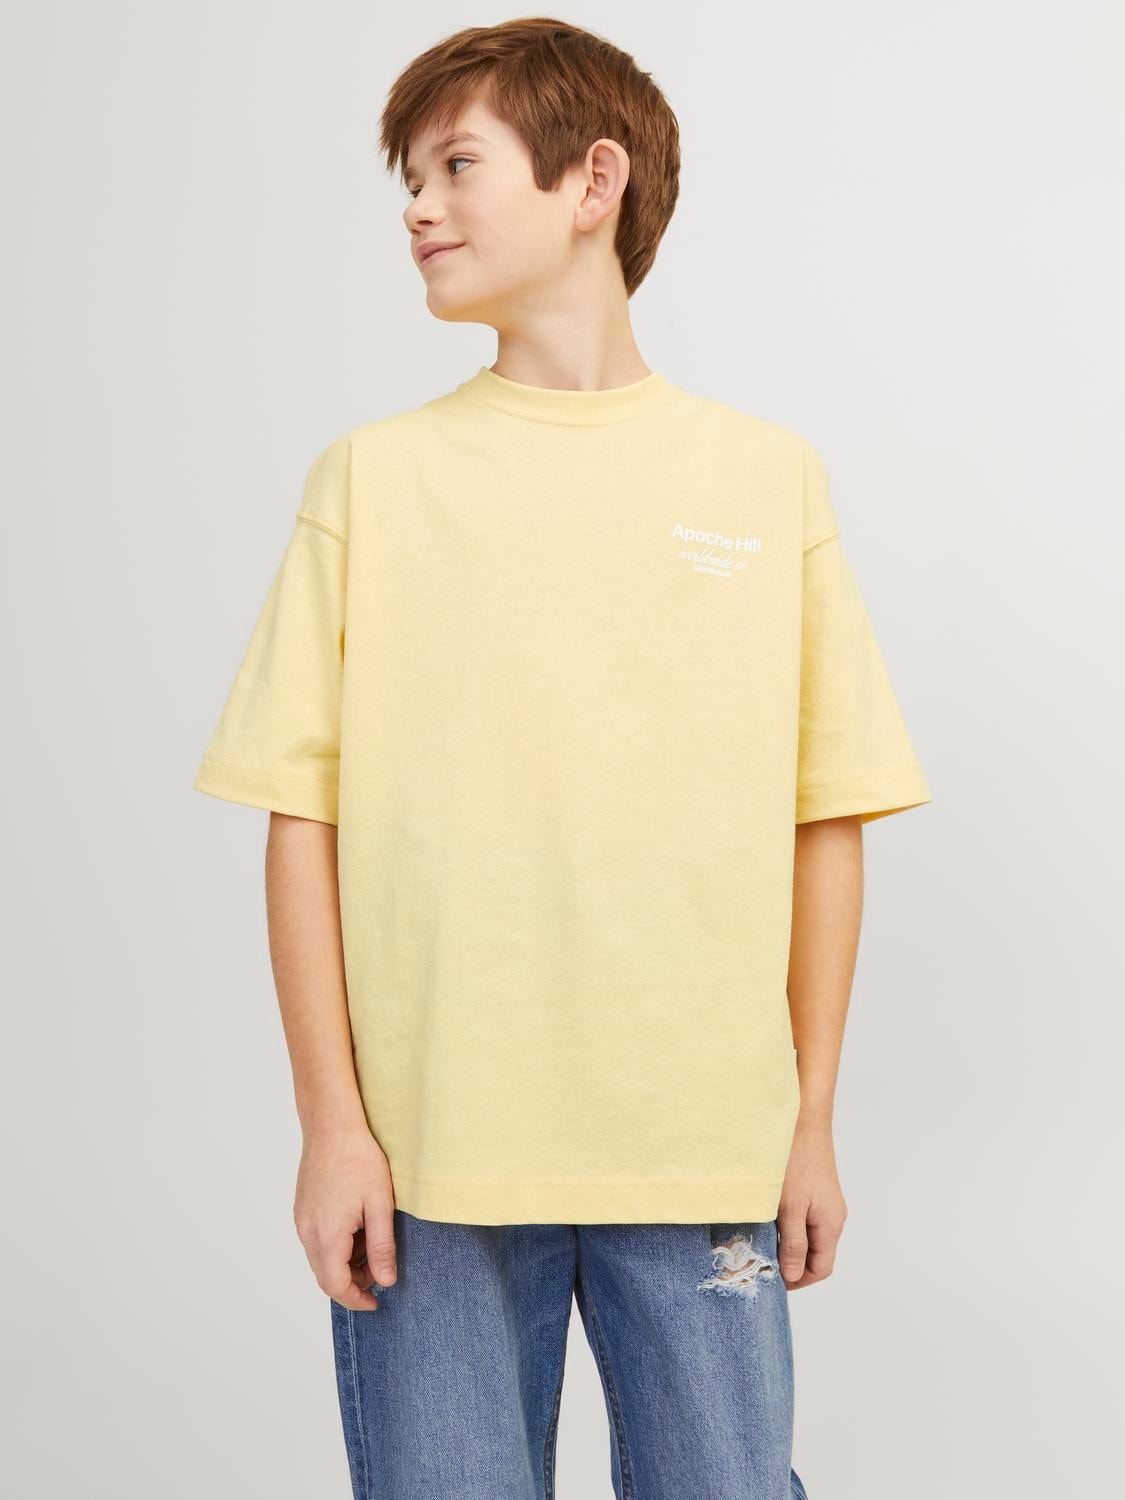 Camiseta Estampado Para chicos, Amarillo claro